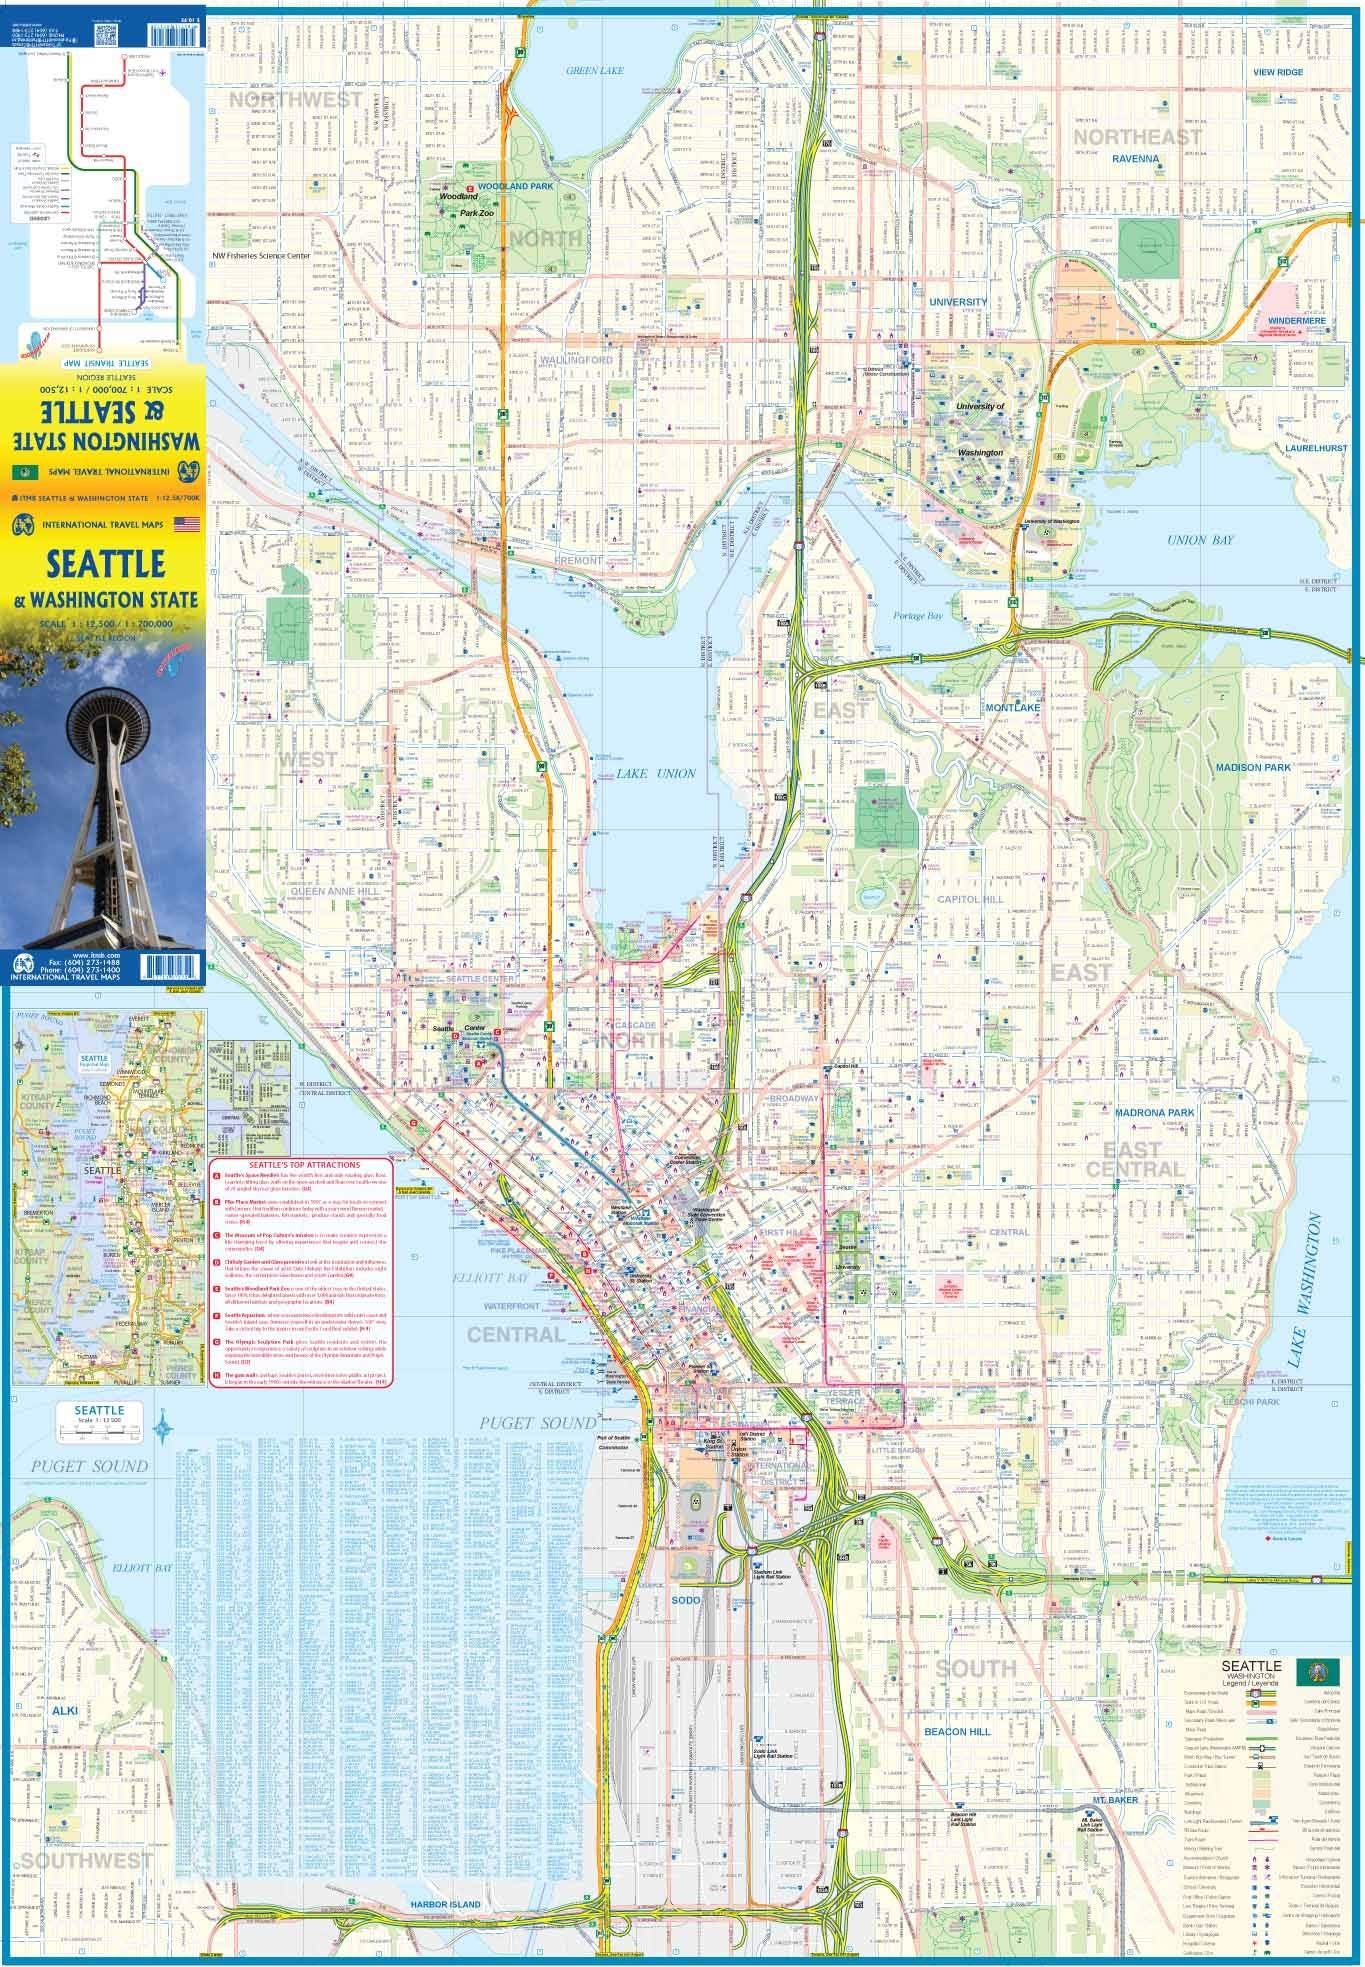 Seattle & Washington State ITM Map 3e